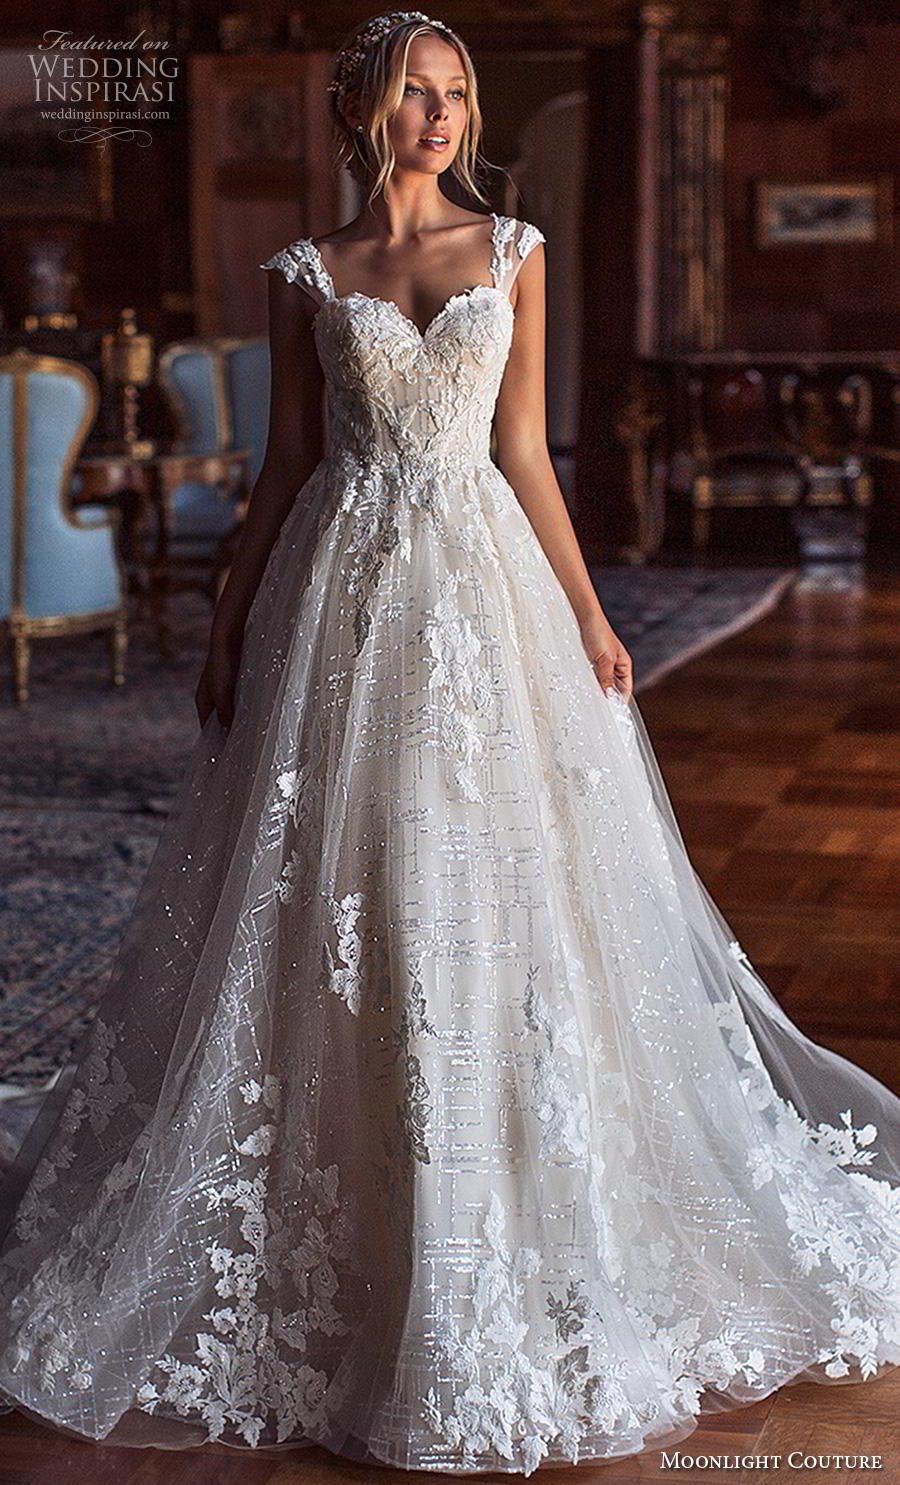 Moonlight Couture Spring 2019 Wedding Dresses | Wedding Inspirasi